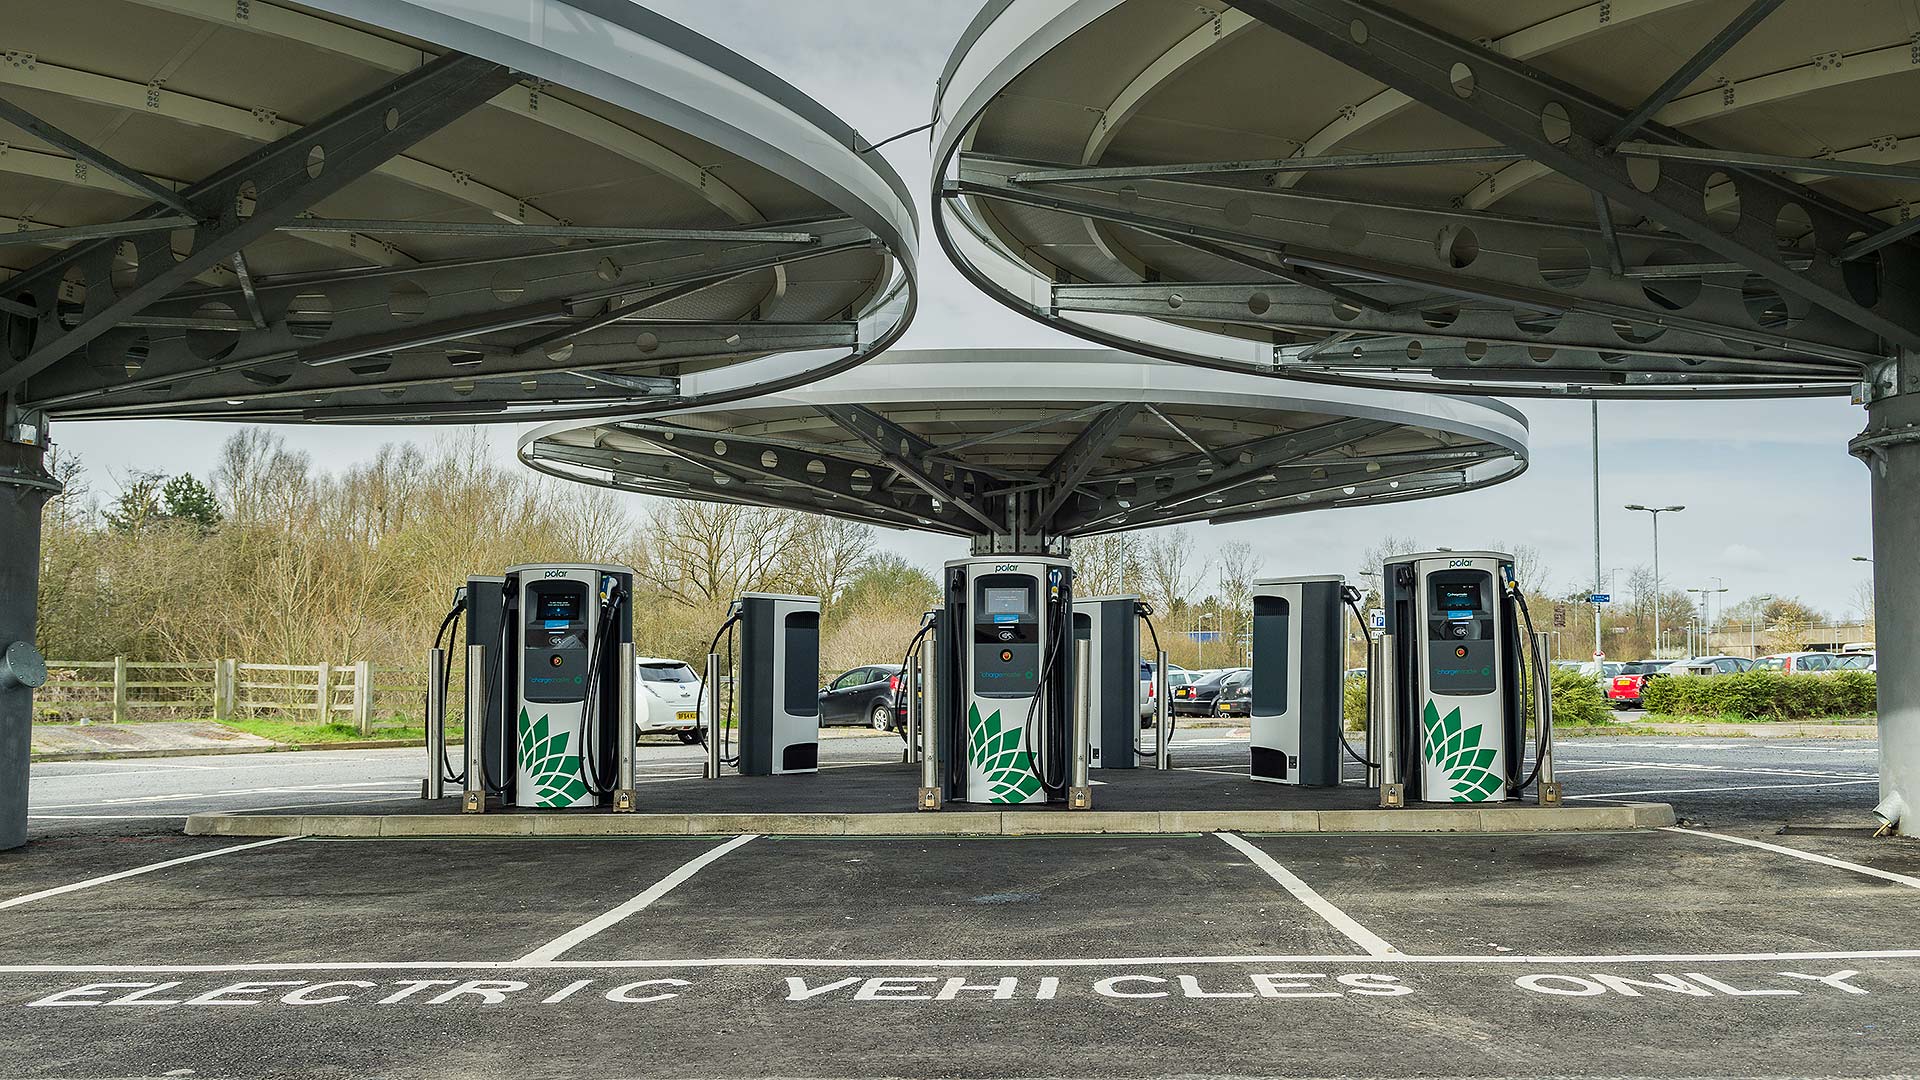 BP Chargemaster rapid charging hub at Milton Keynes Coachway